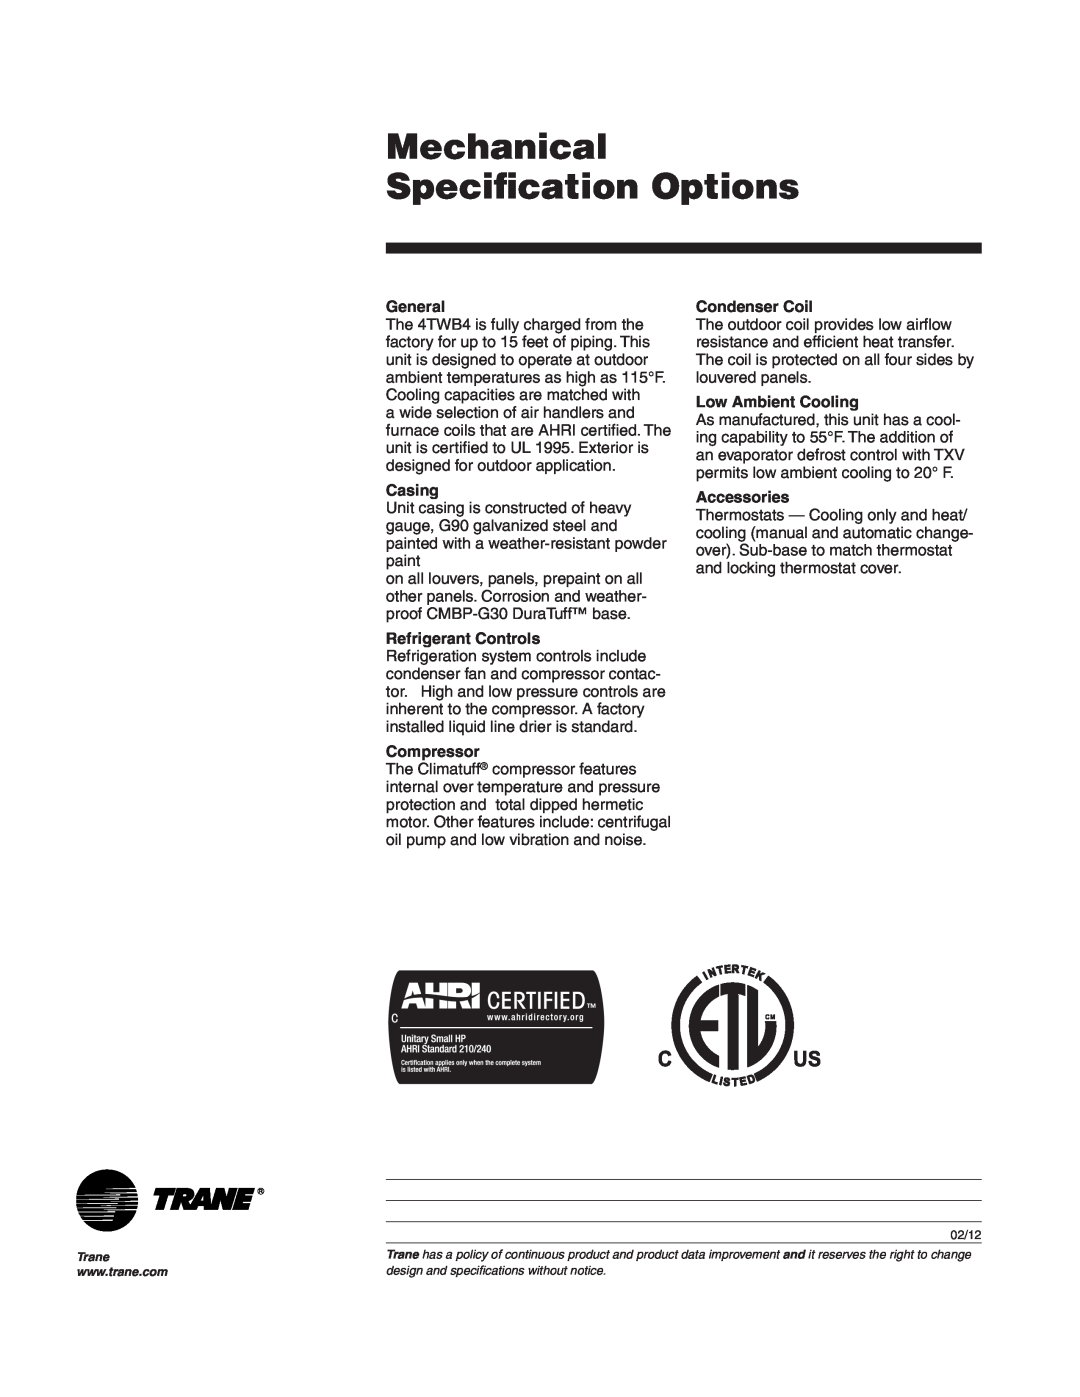 Trane 4TWB4 manual Mechanical Specification Options, General, Casing, Refrigerant Controls, Compressor, Condenser Coil 